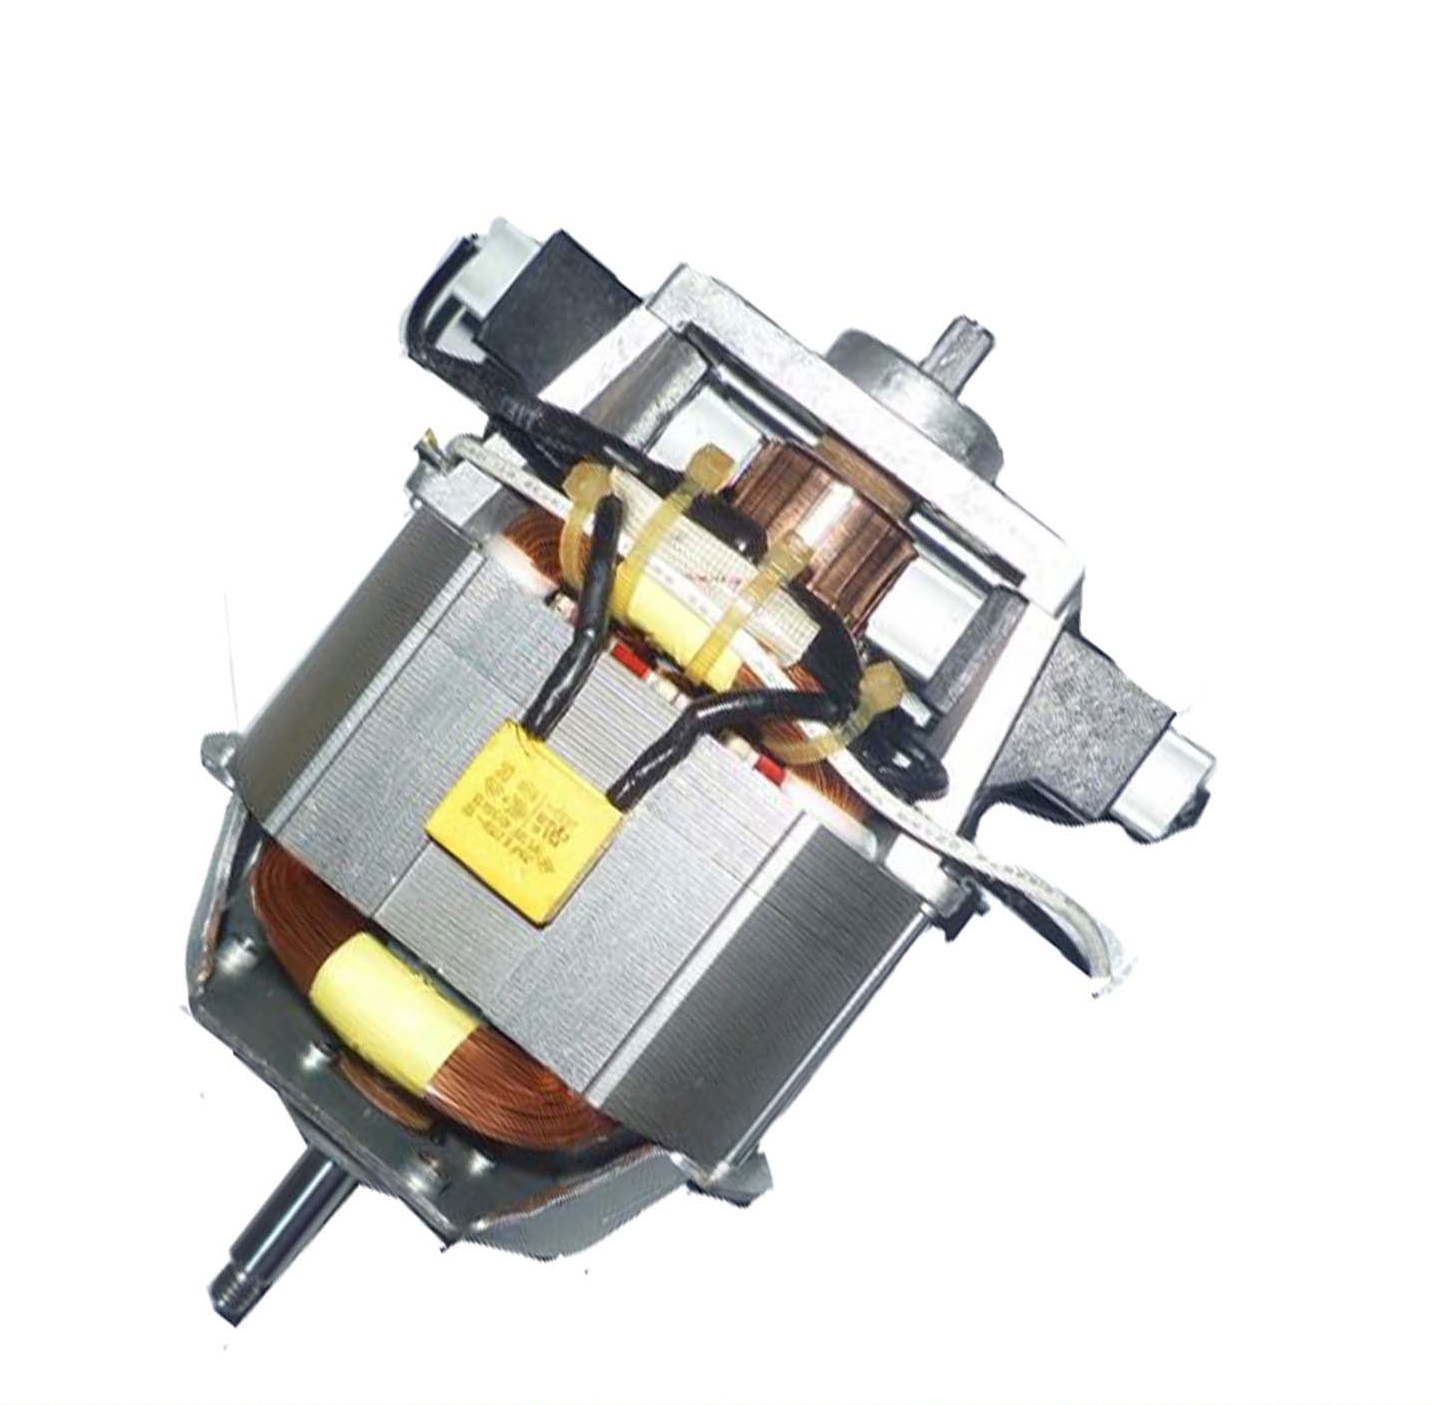 U95 AC Electrical Universal Motor for Blender